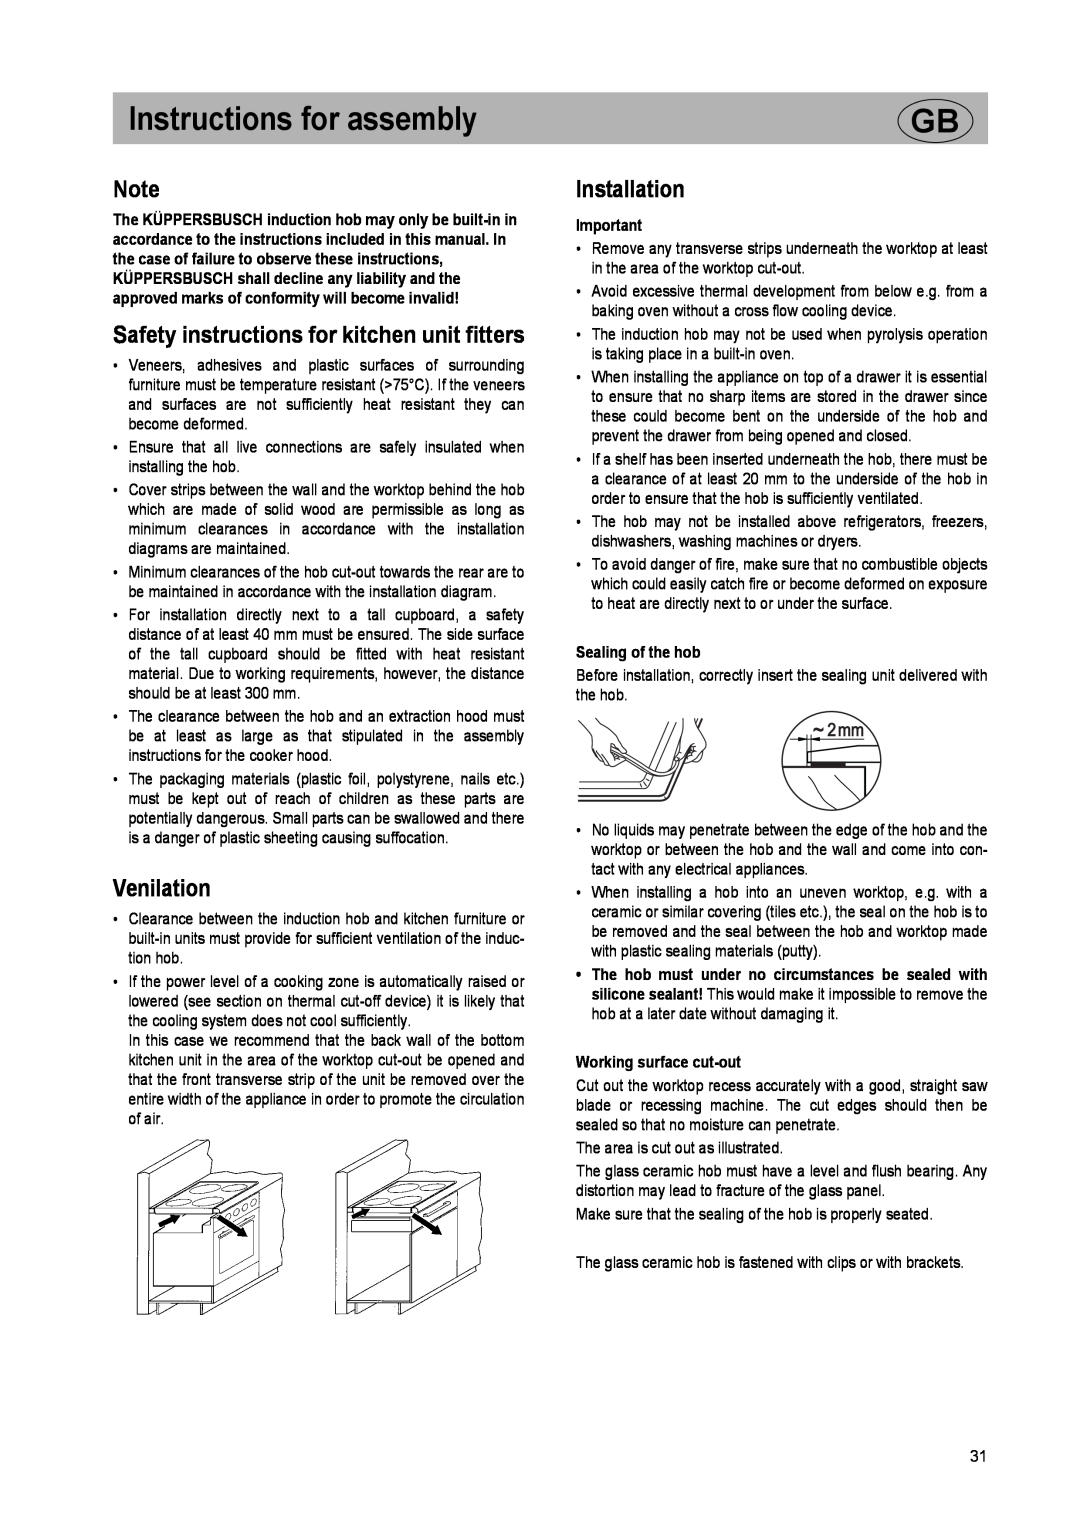 Kuppersbusch USA EKI 807.2, EKI 607.2 Instructions for assembly, Safety instructions for kitchen unit fitters, Venilation 